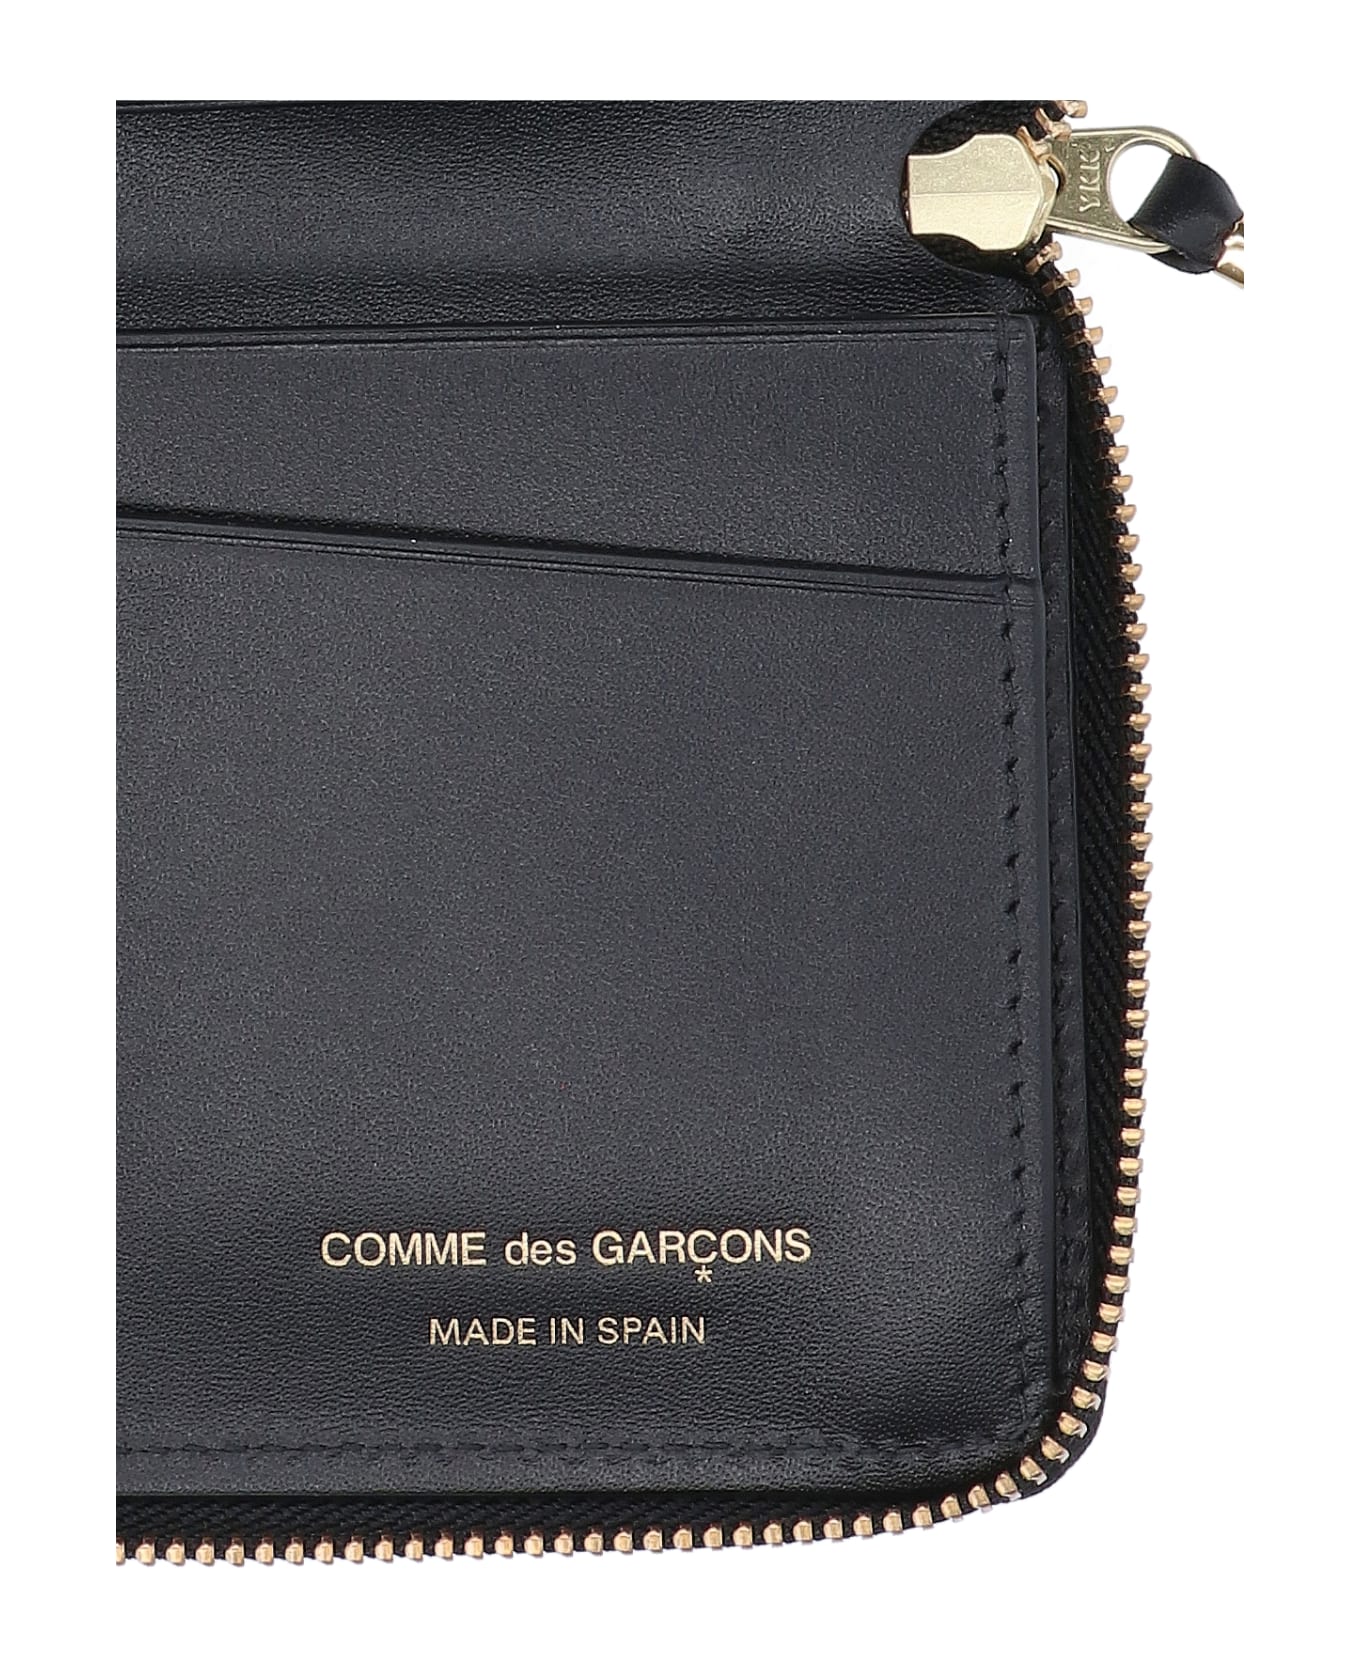 Comme des Garçons Wallet Logo Wallet - Black   財布